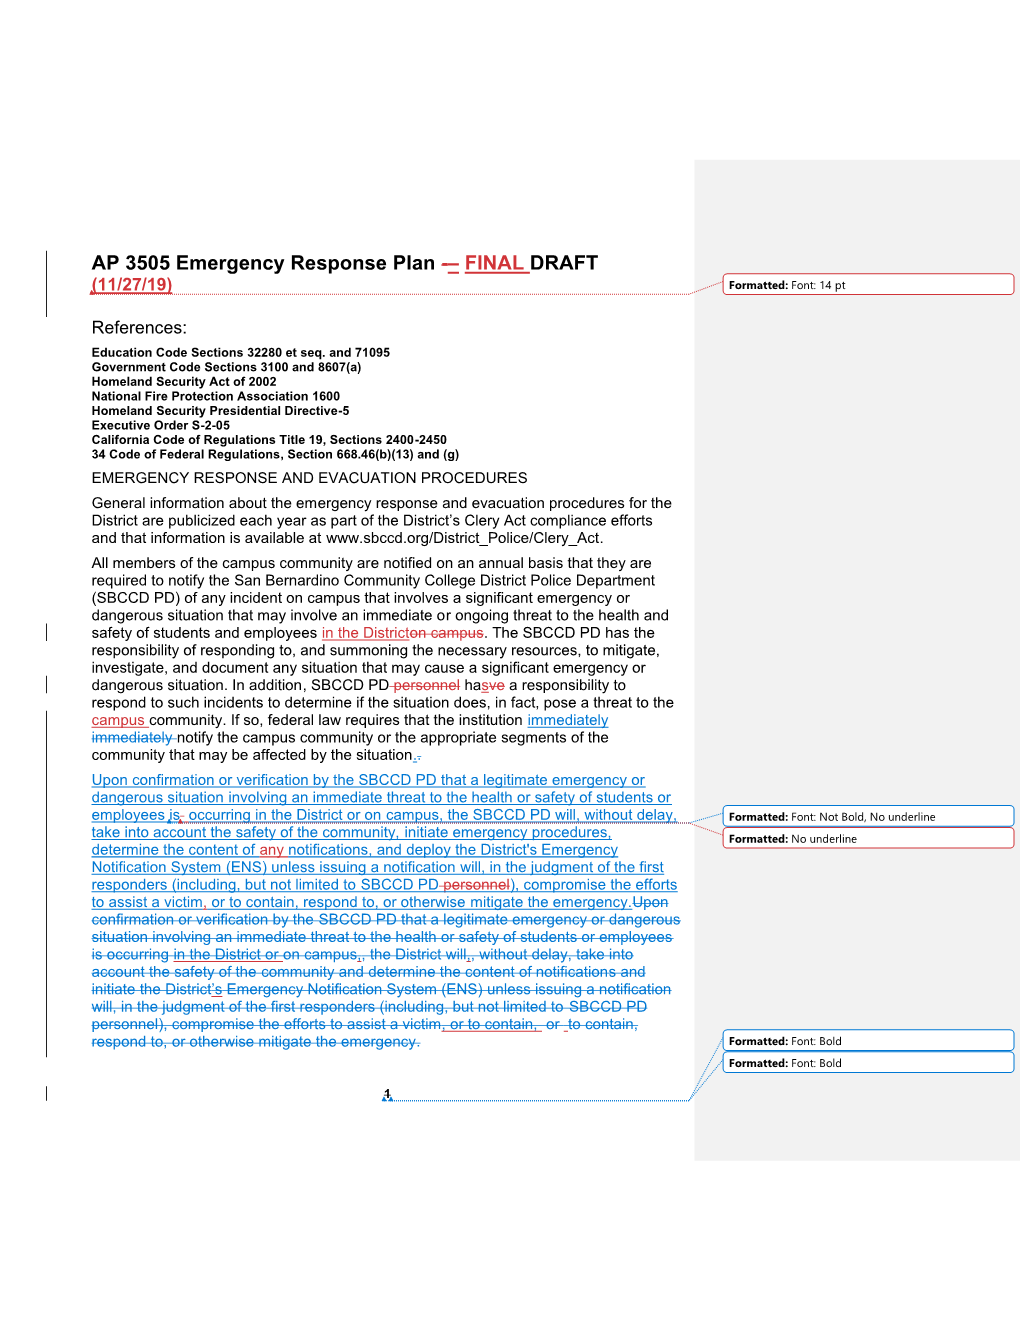 AP 3505 Emergency Response Plan Final DRAFT